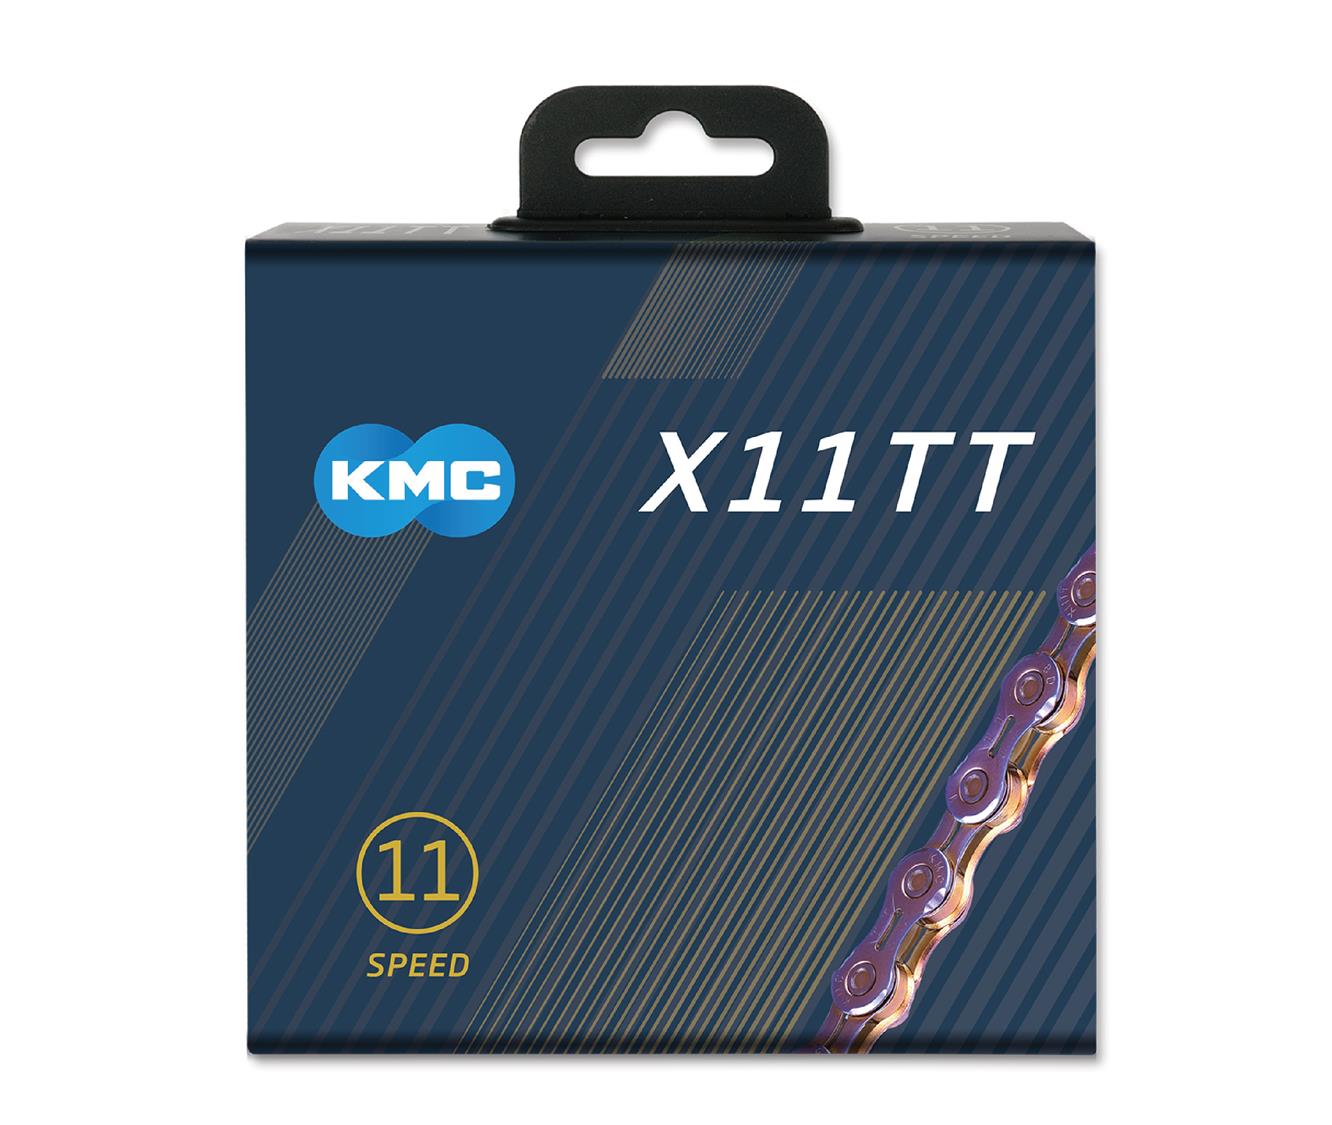 KMC_TT package front